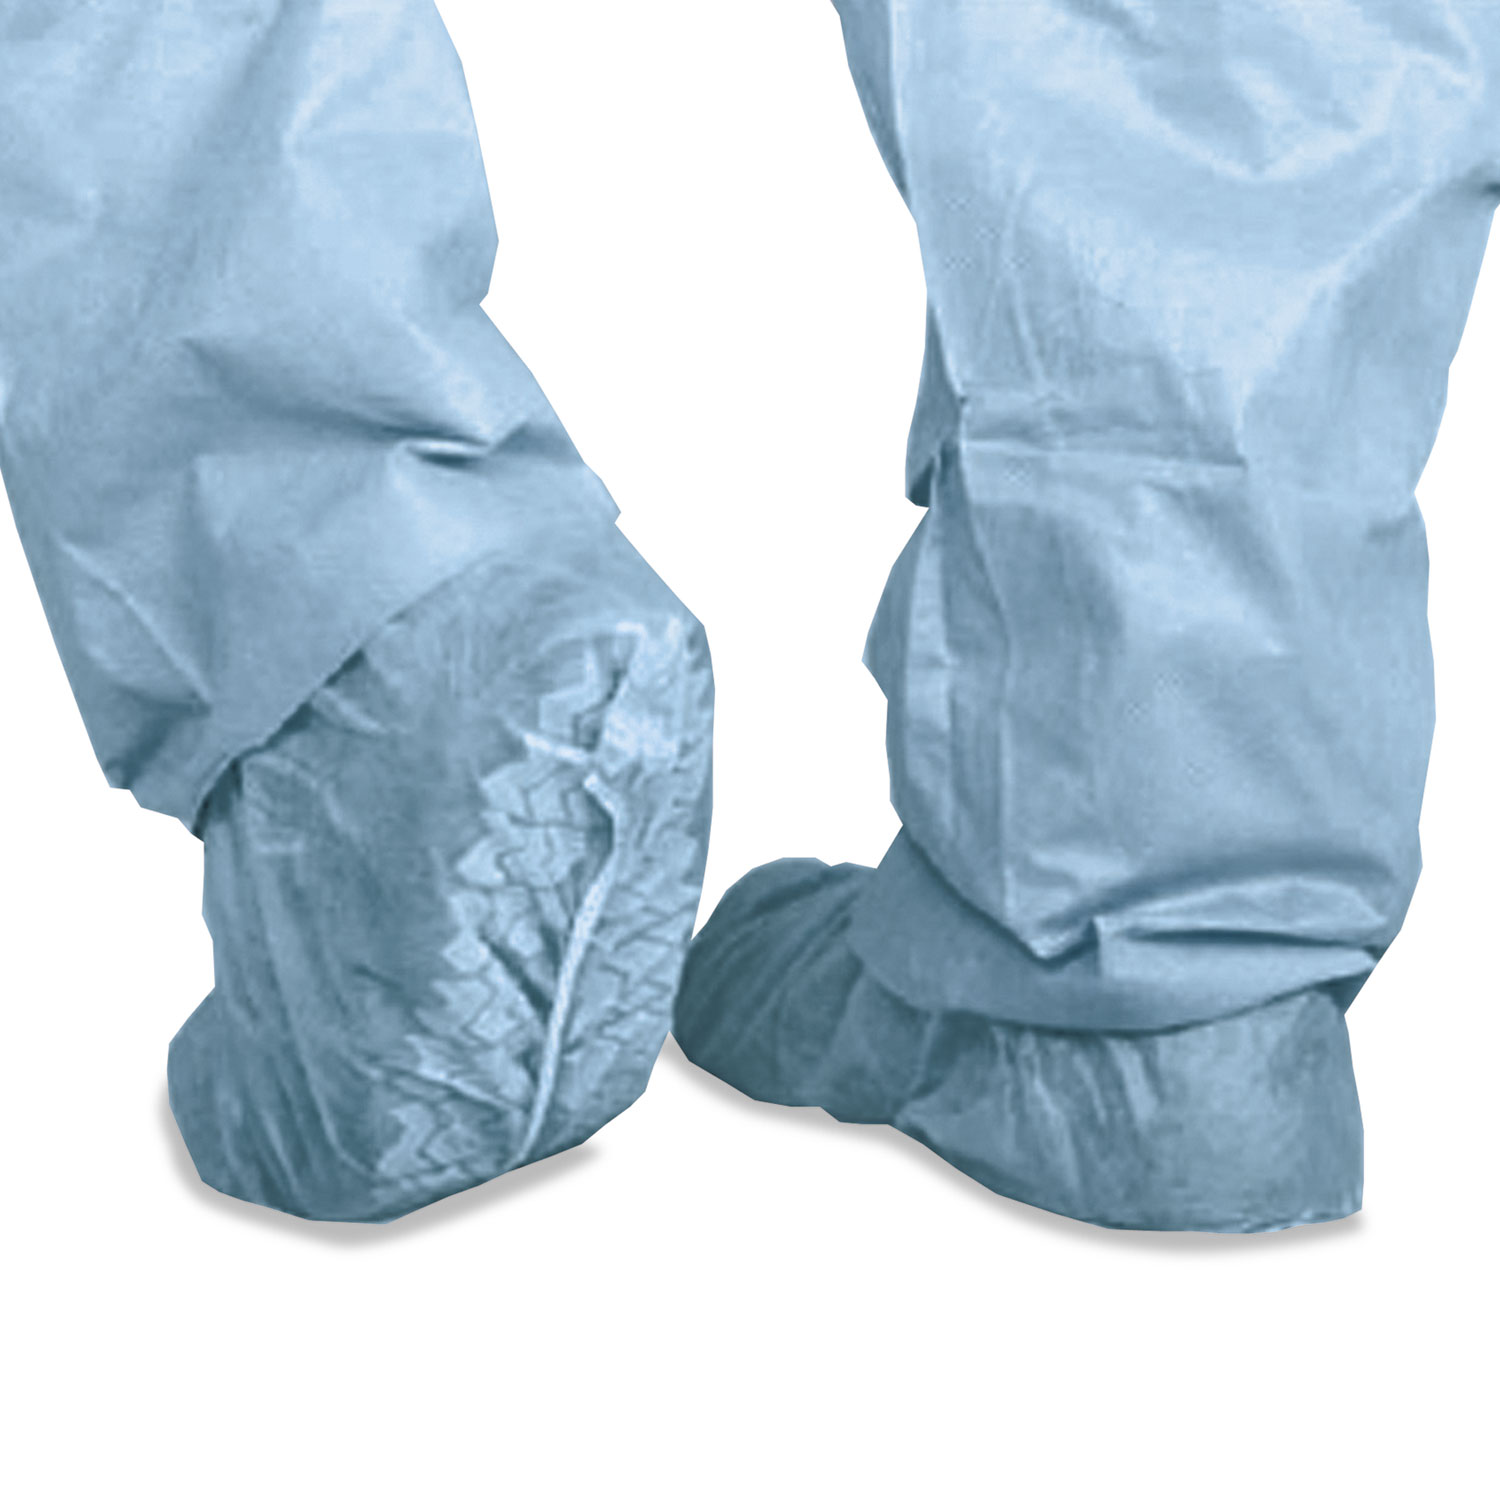  Medline CRI2002 Polypropylene Non-Skid Shoe Covers, Large, Blue, 100/Box (MIICRI2002) 